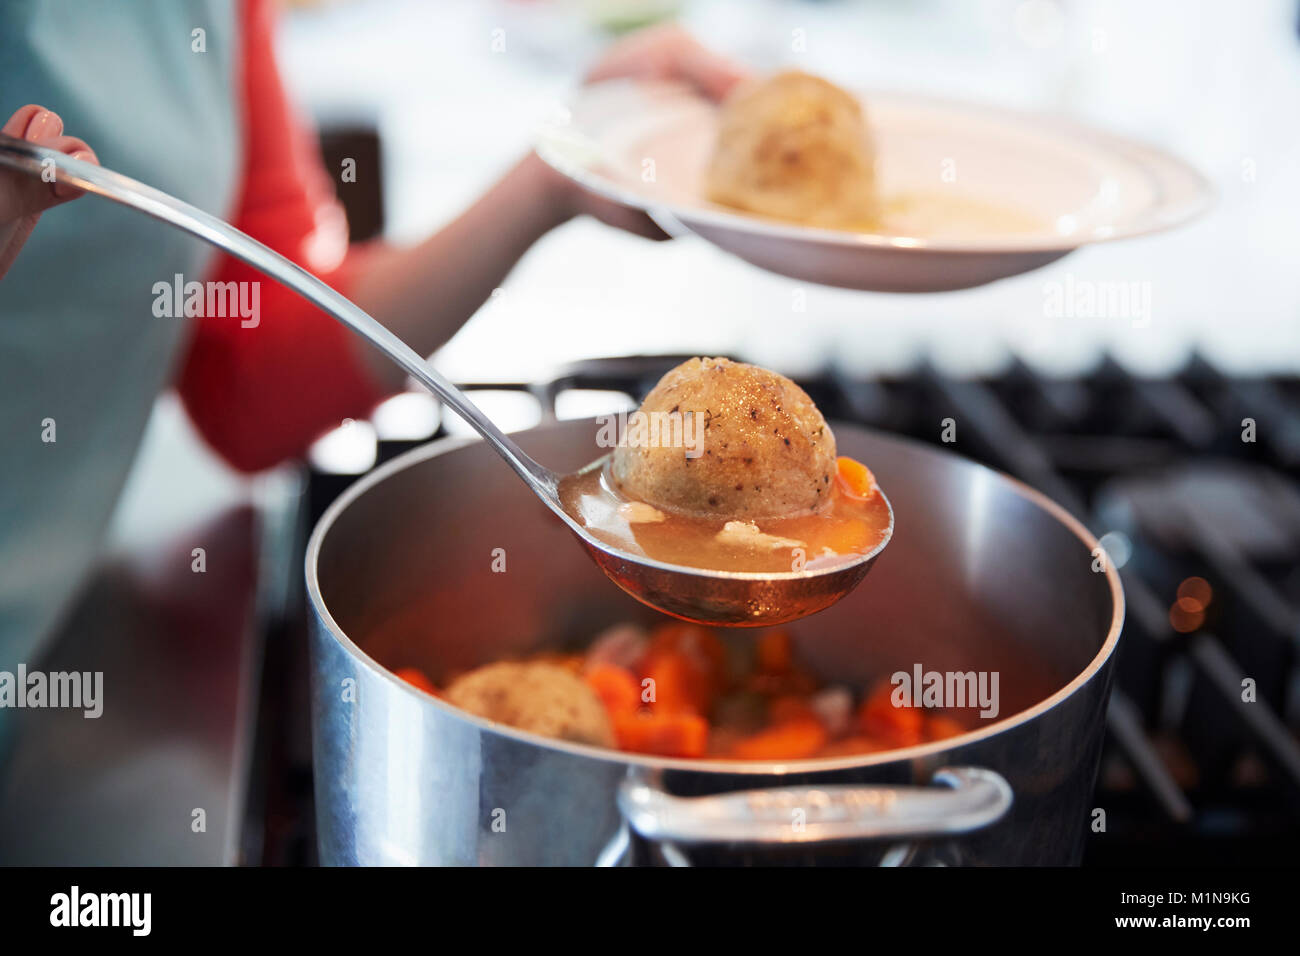 Big soup pot hi-res stock photography and images - Alamy